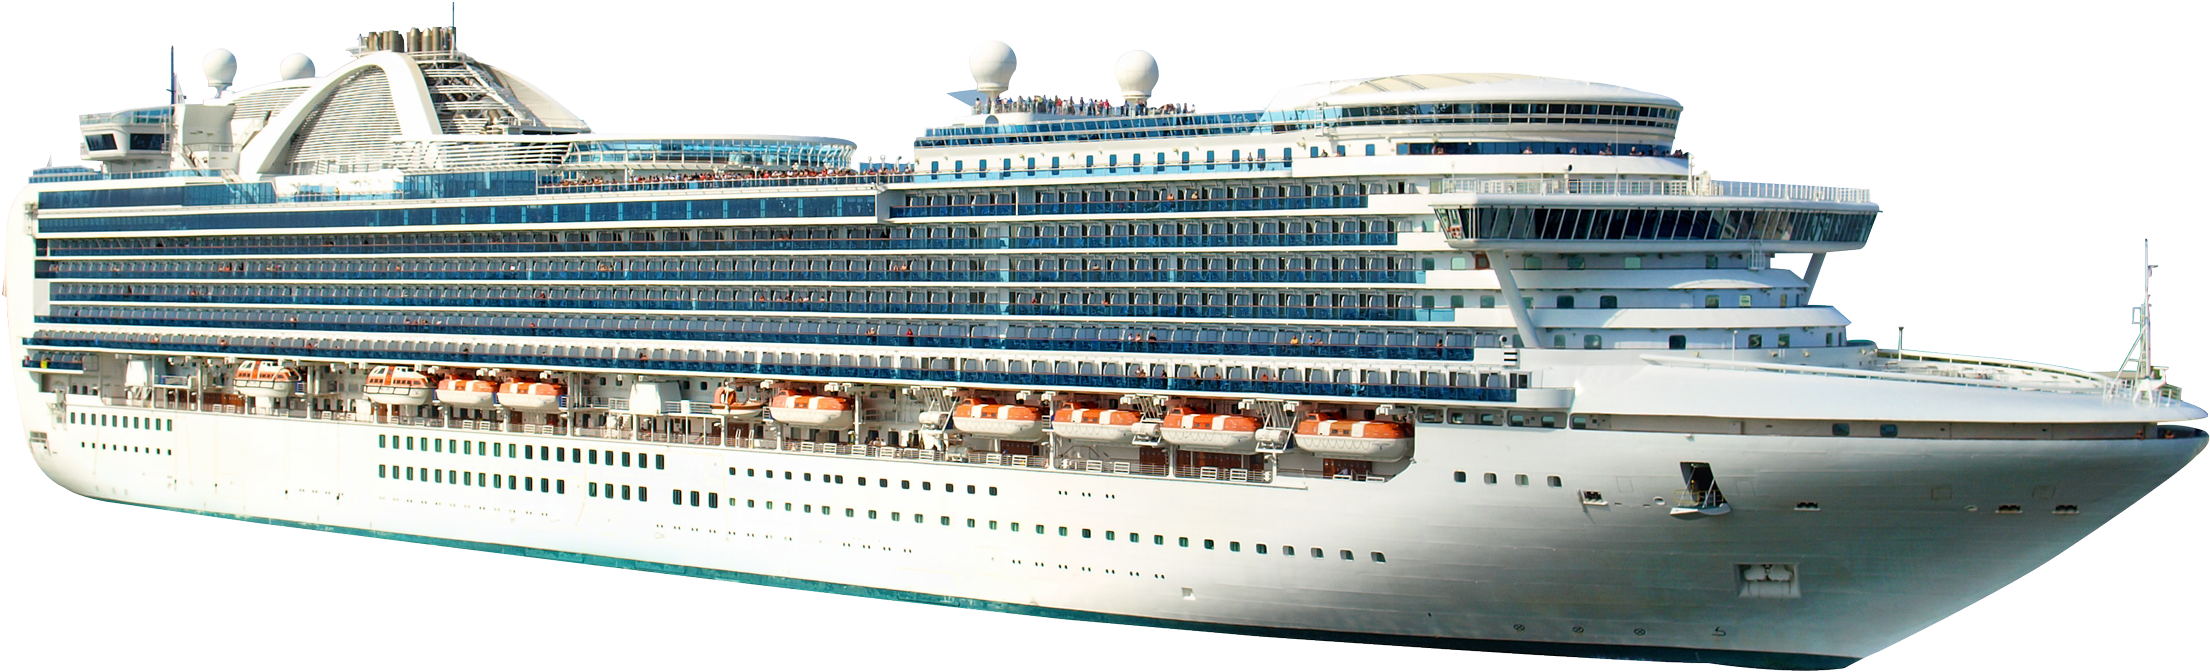 Modern Cruise Liner Profile